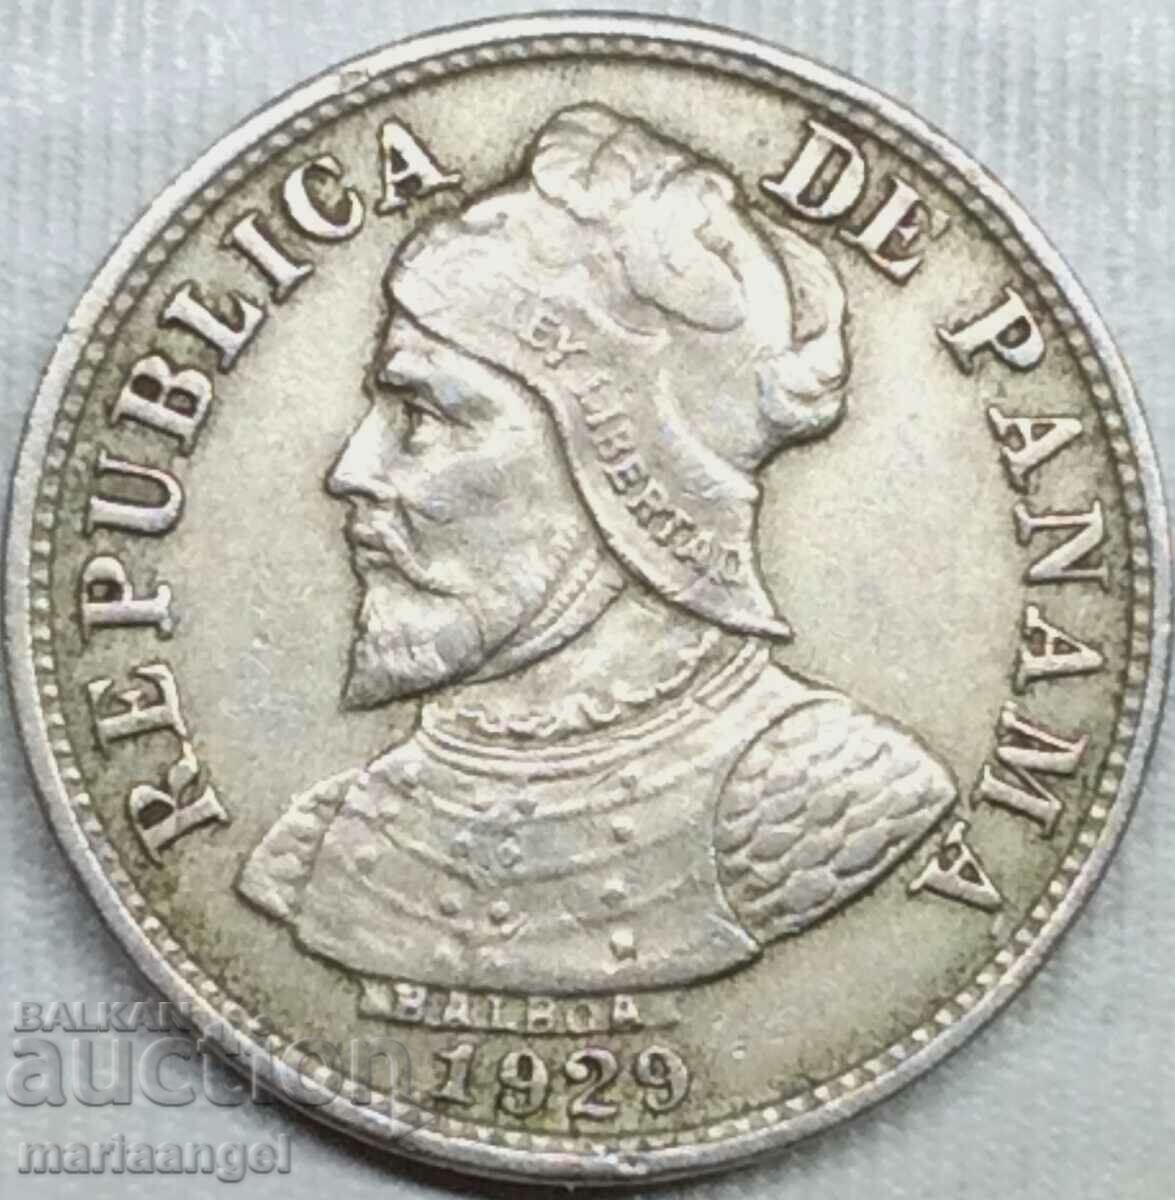 Panama 1929 2 1/2 centimos di Balboa silver